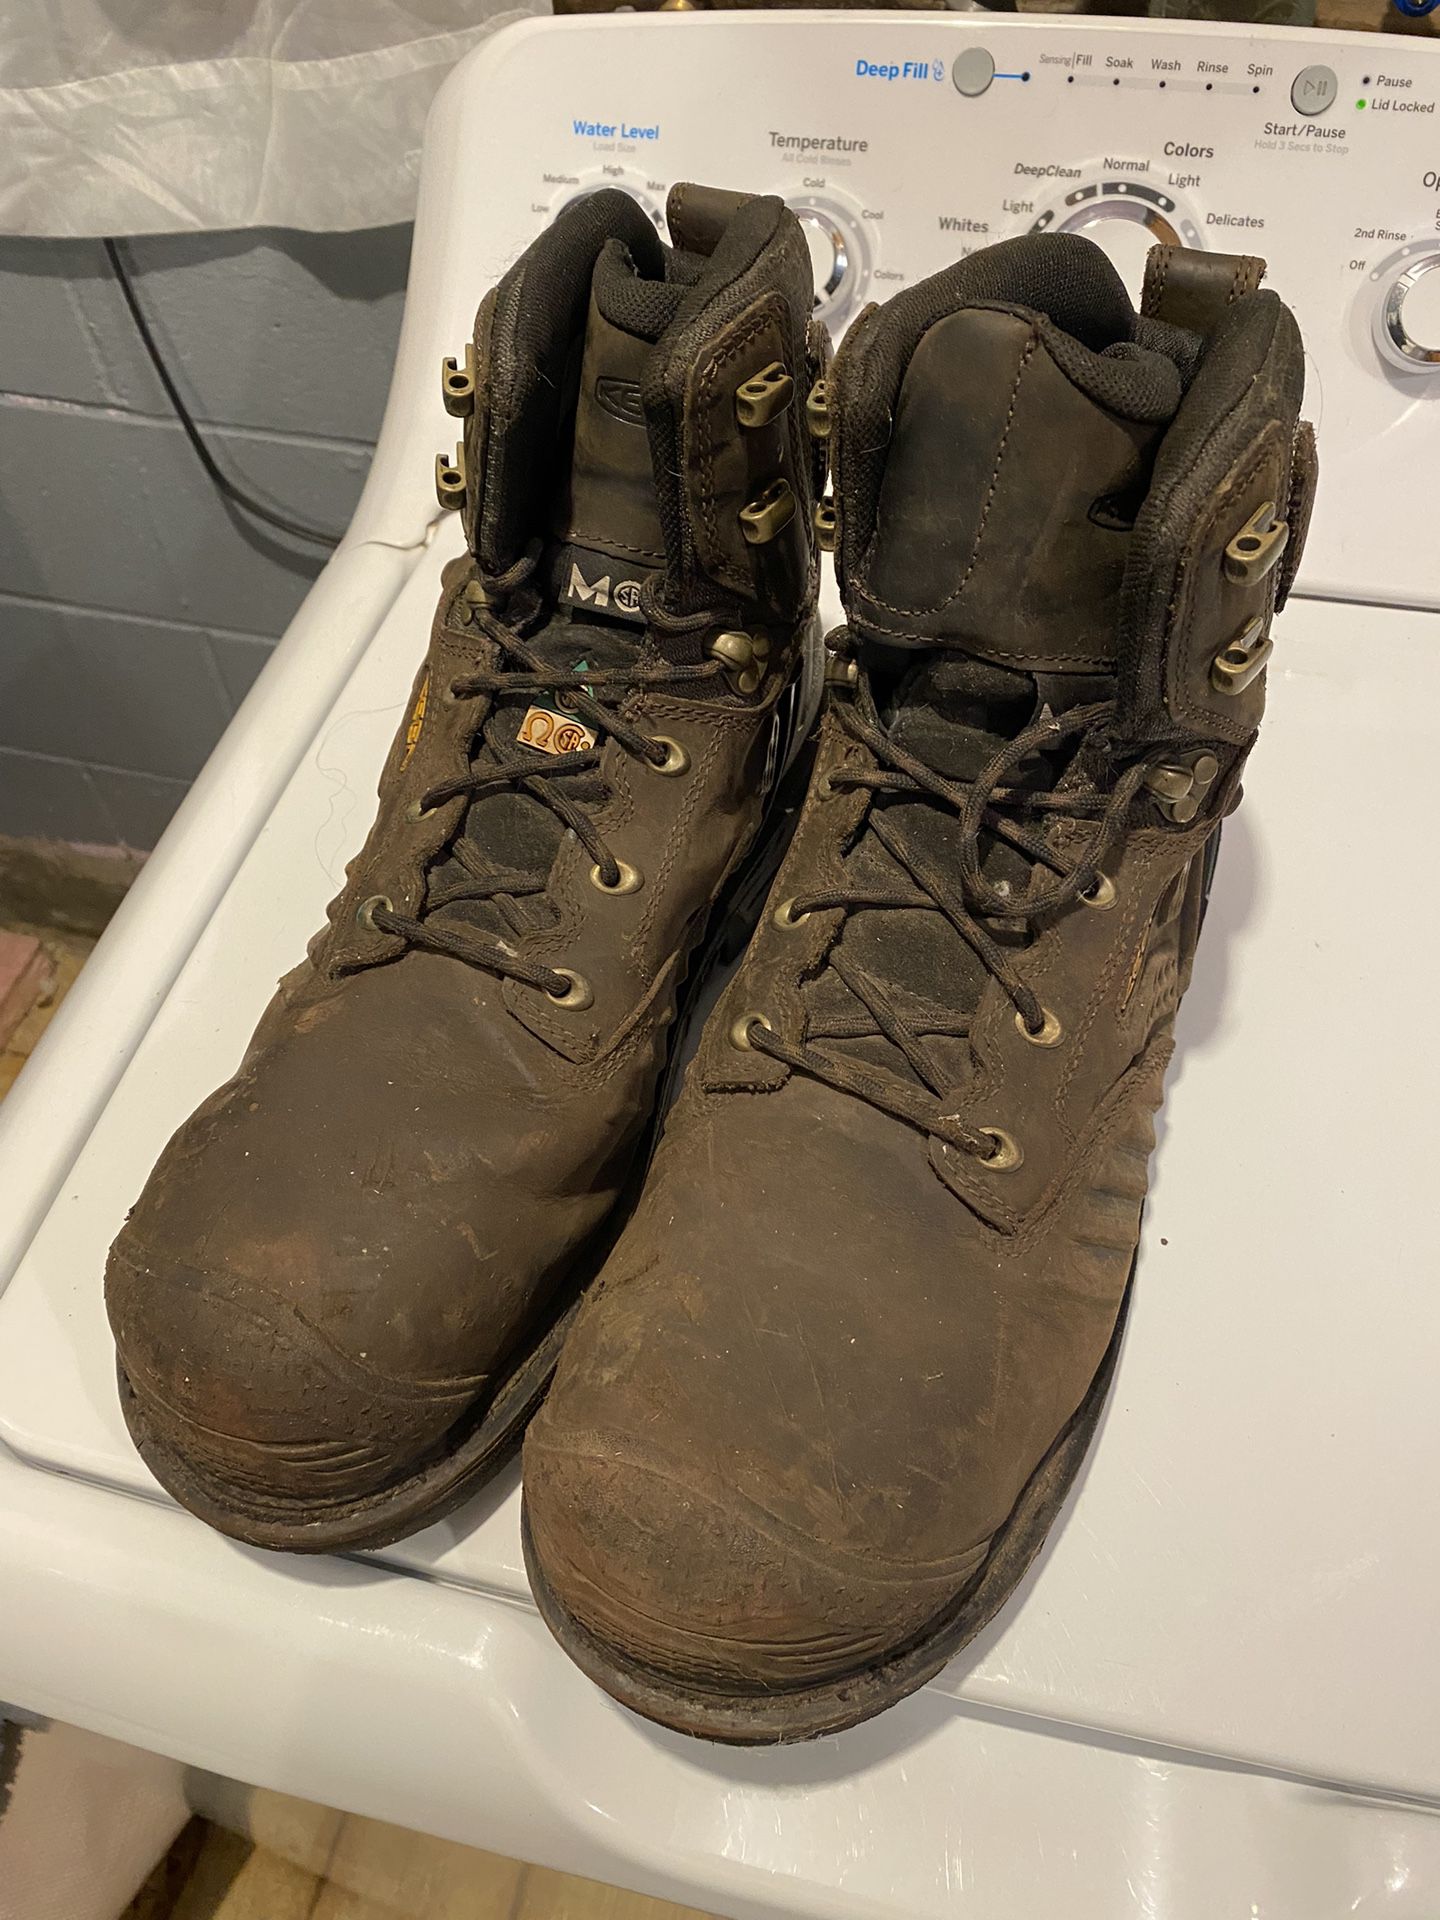 Keen Steel Toe Work boots 